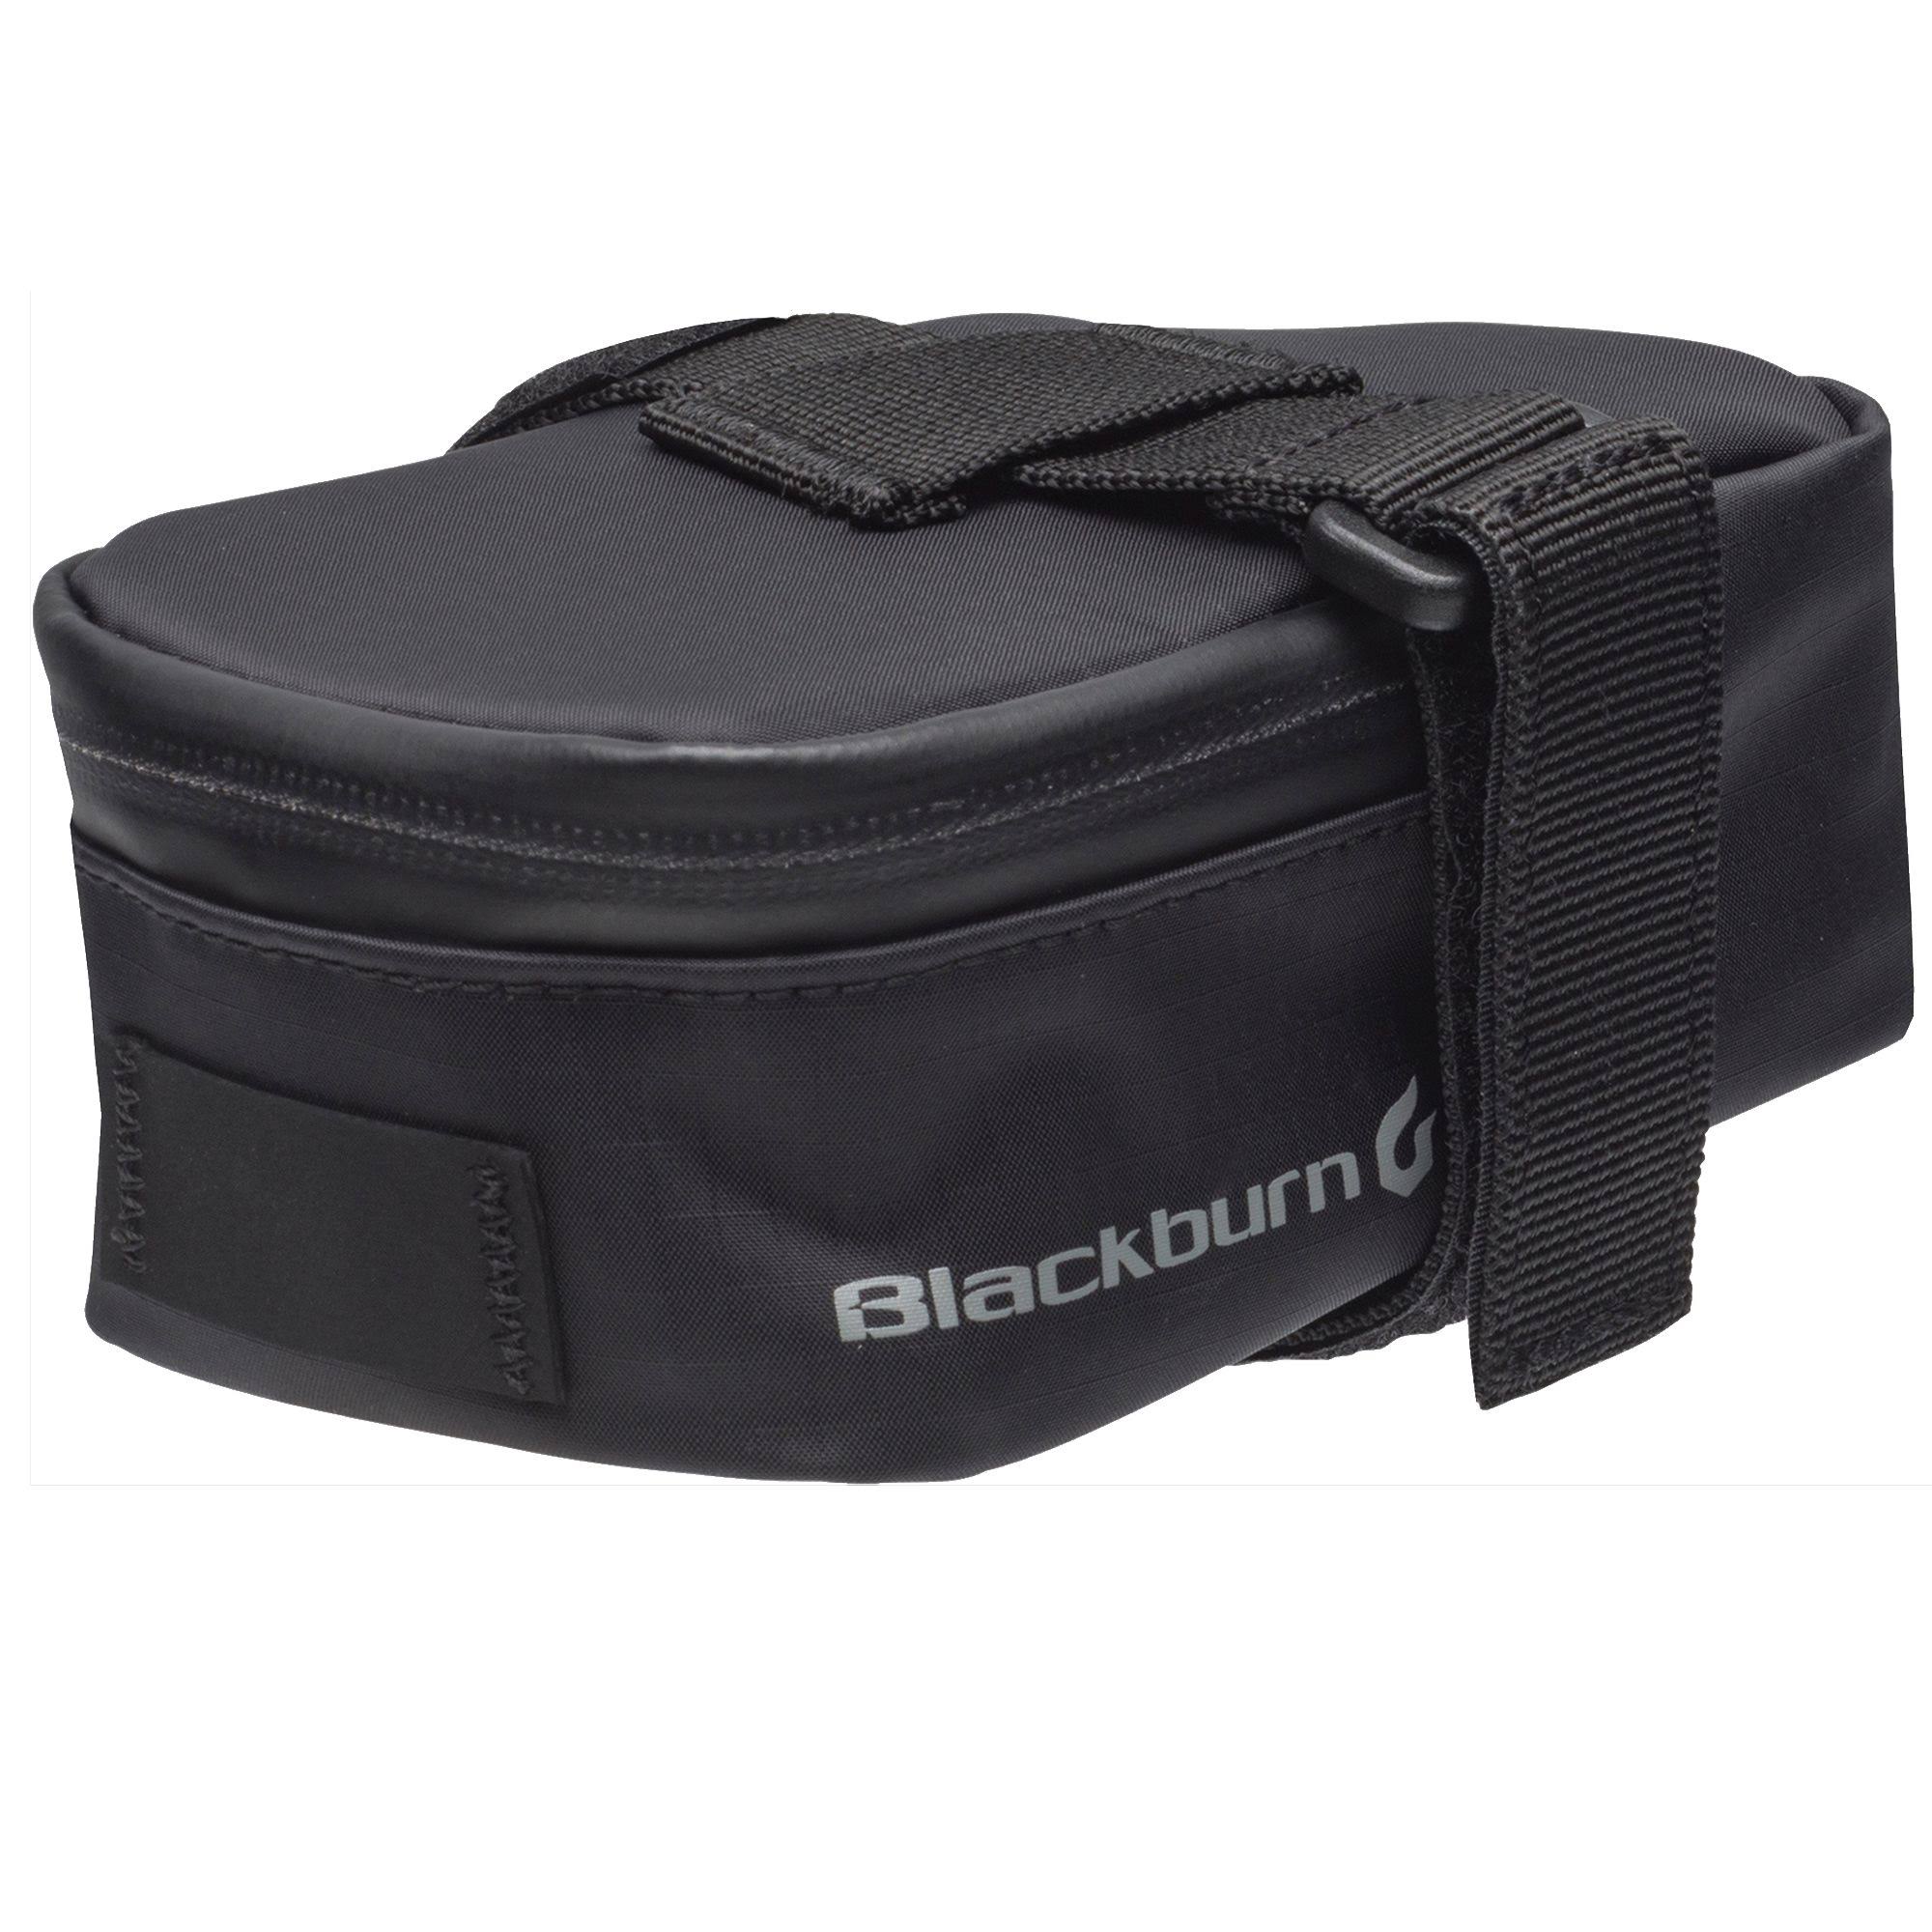 Blackburn Grid MTB Reflective Seat Bag - Black